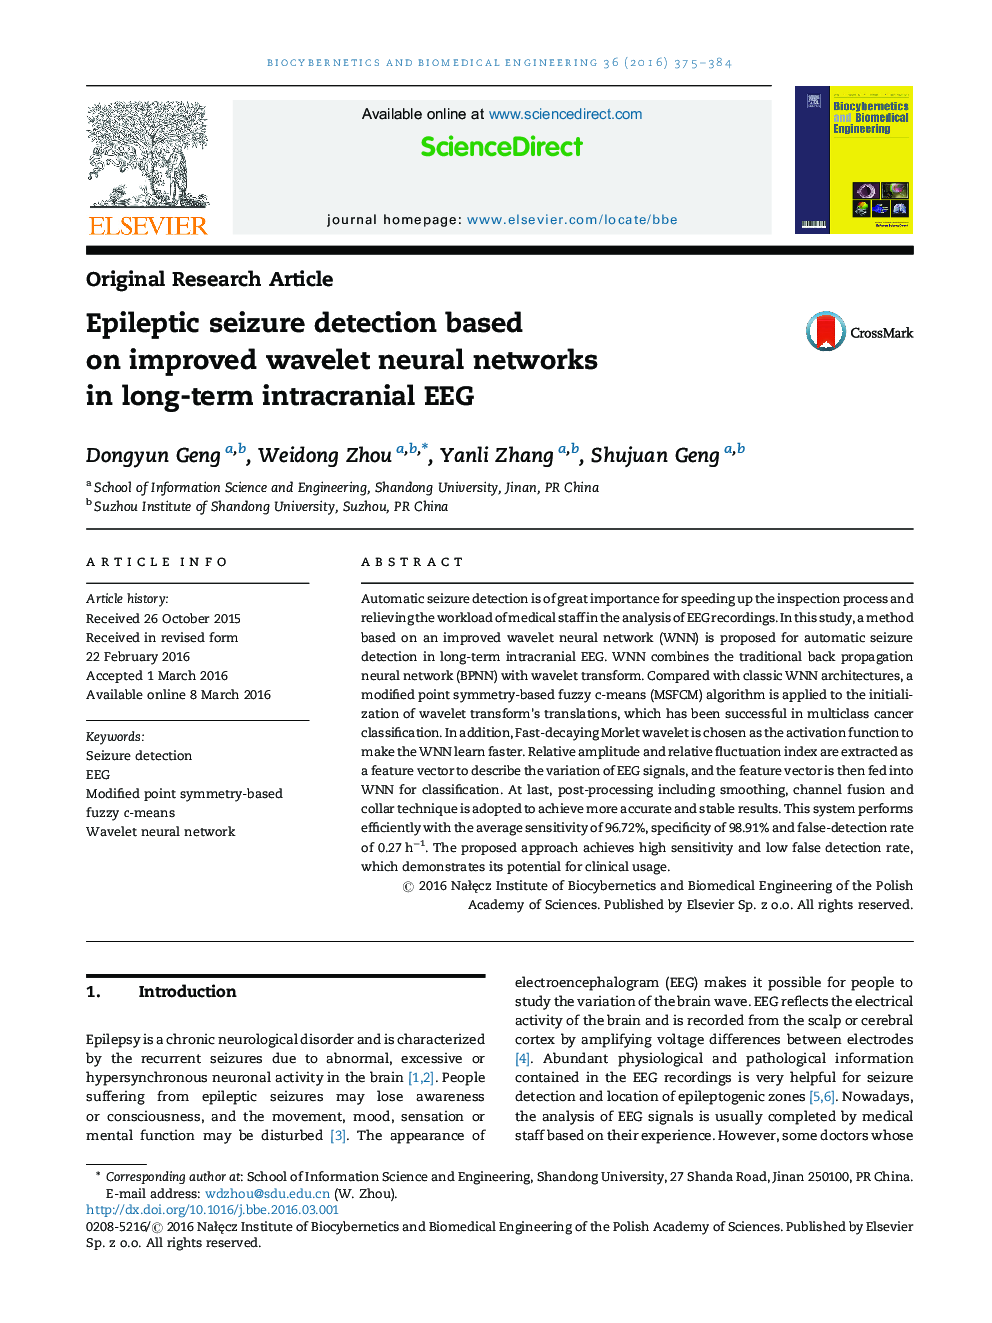 Epileptic seizure detection based on improved wavelet neural networks in long-term intracranial EEG